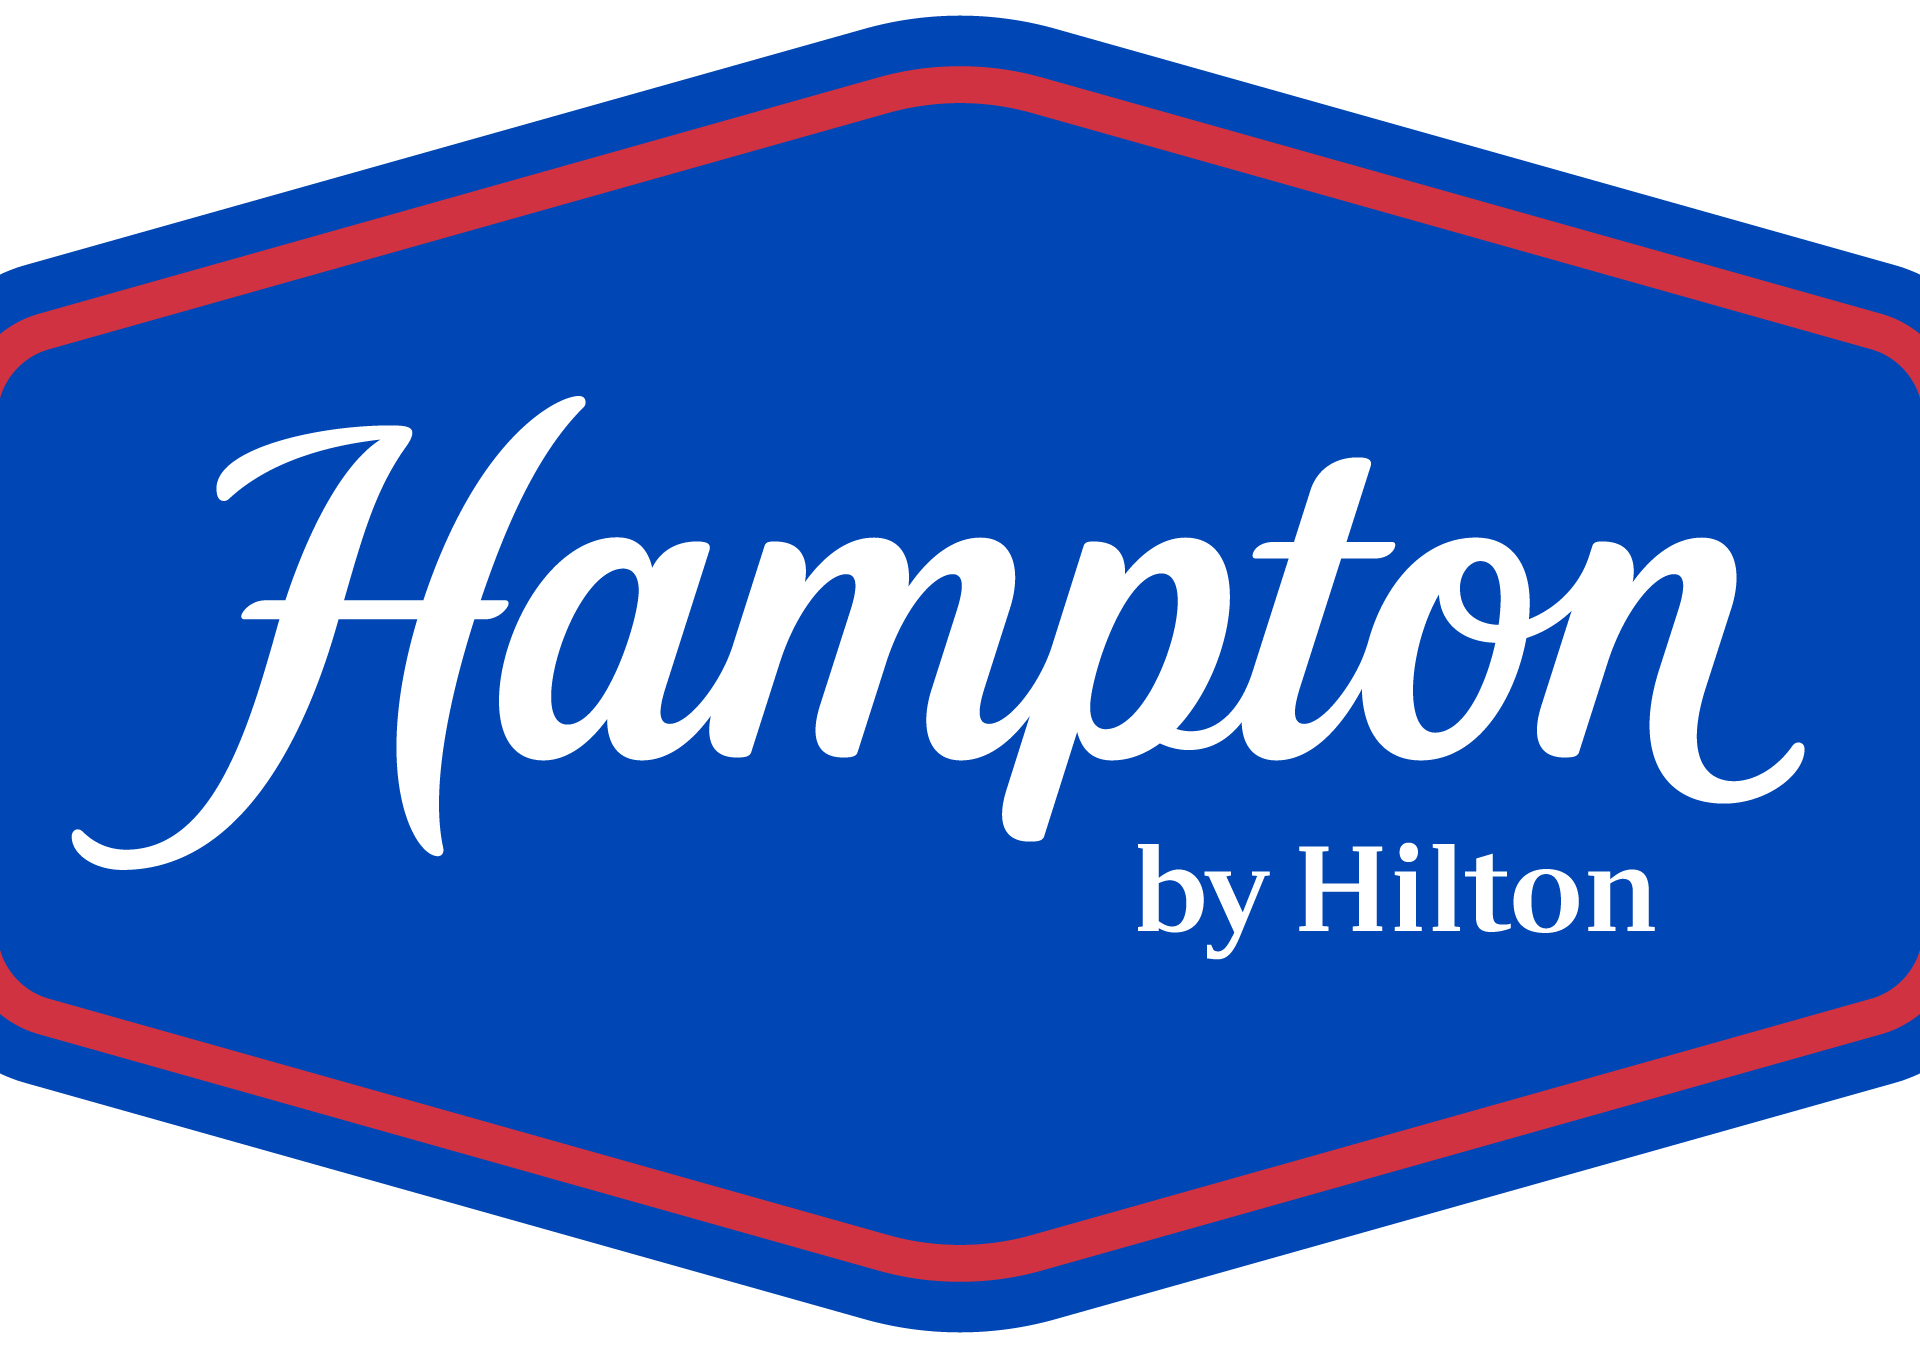 Hampton by Hilton - Logo - Color